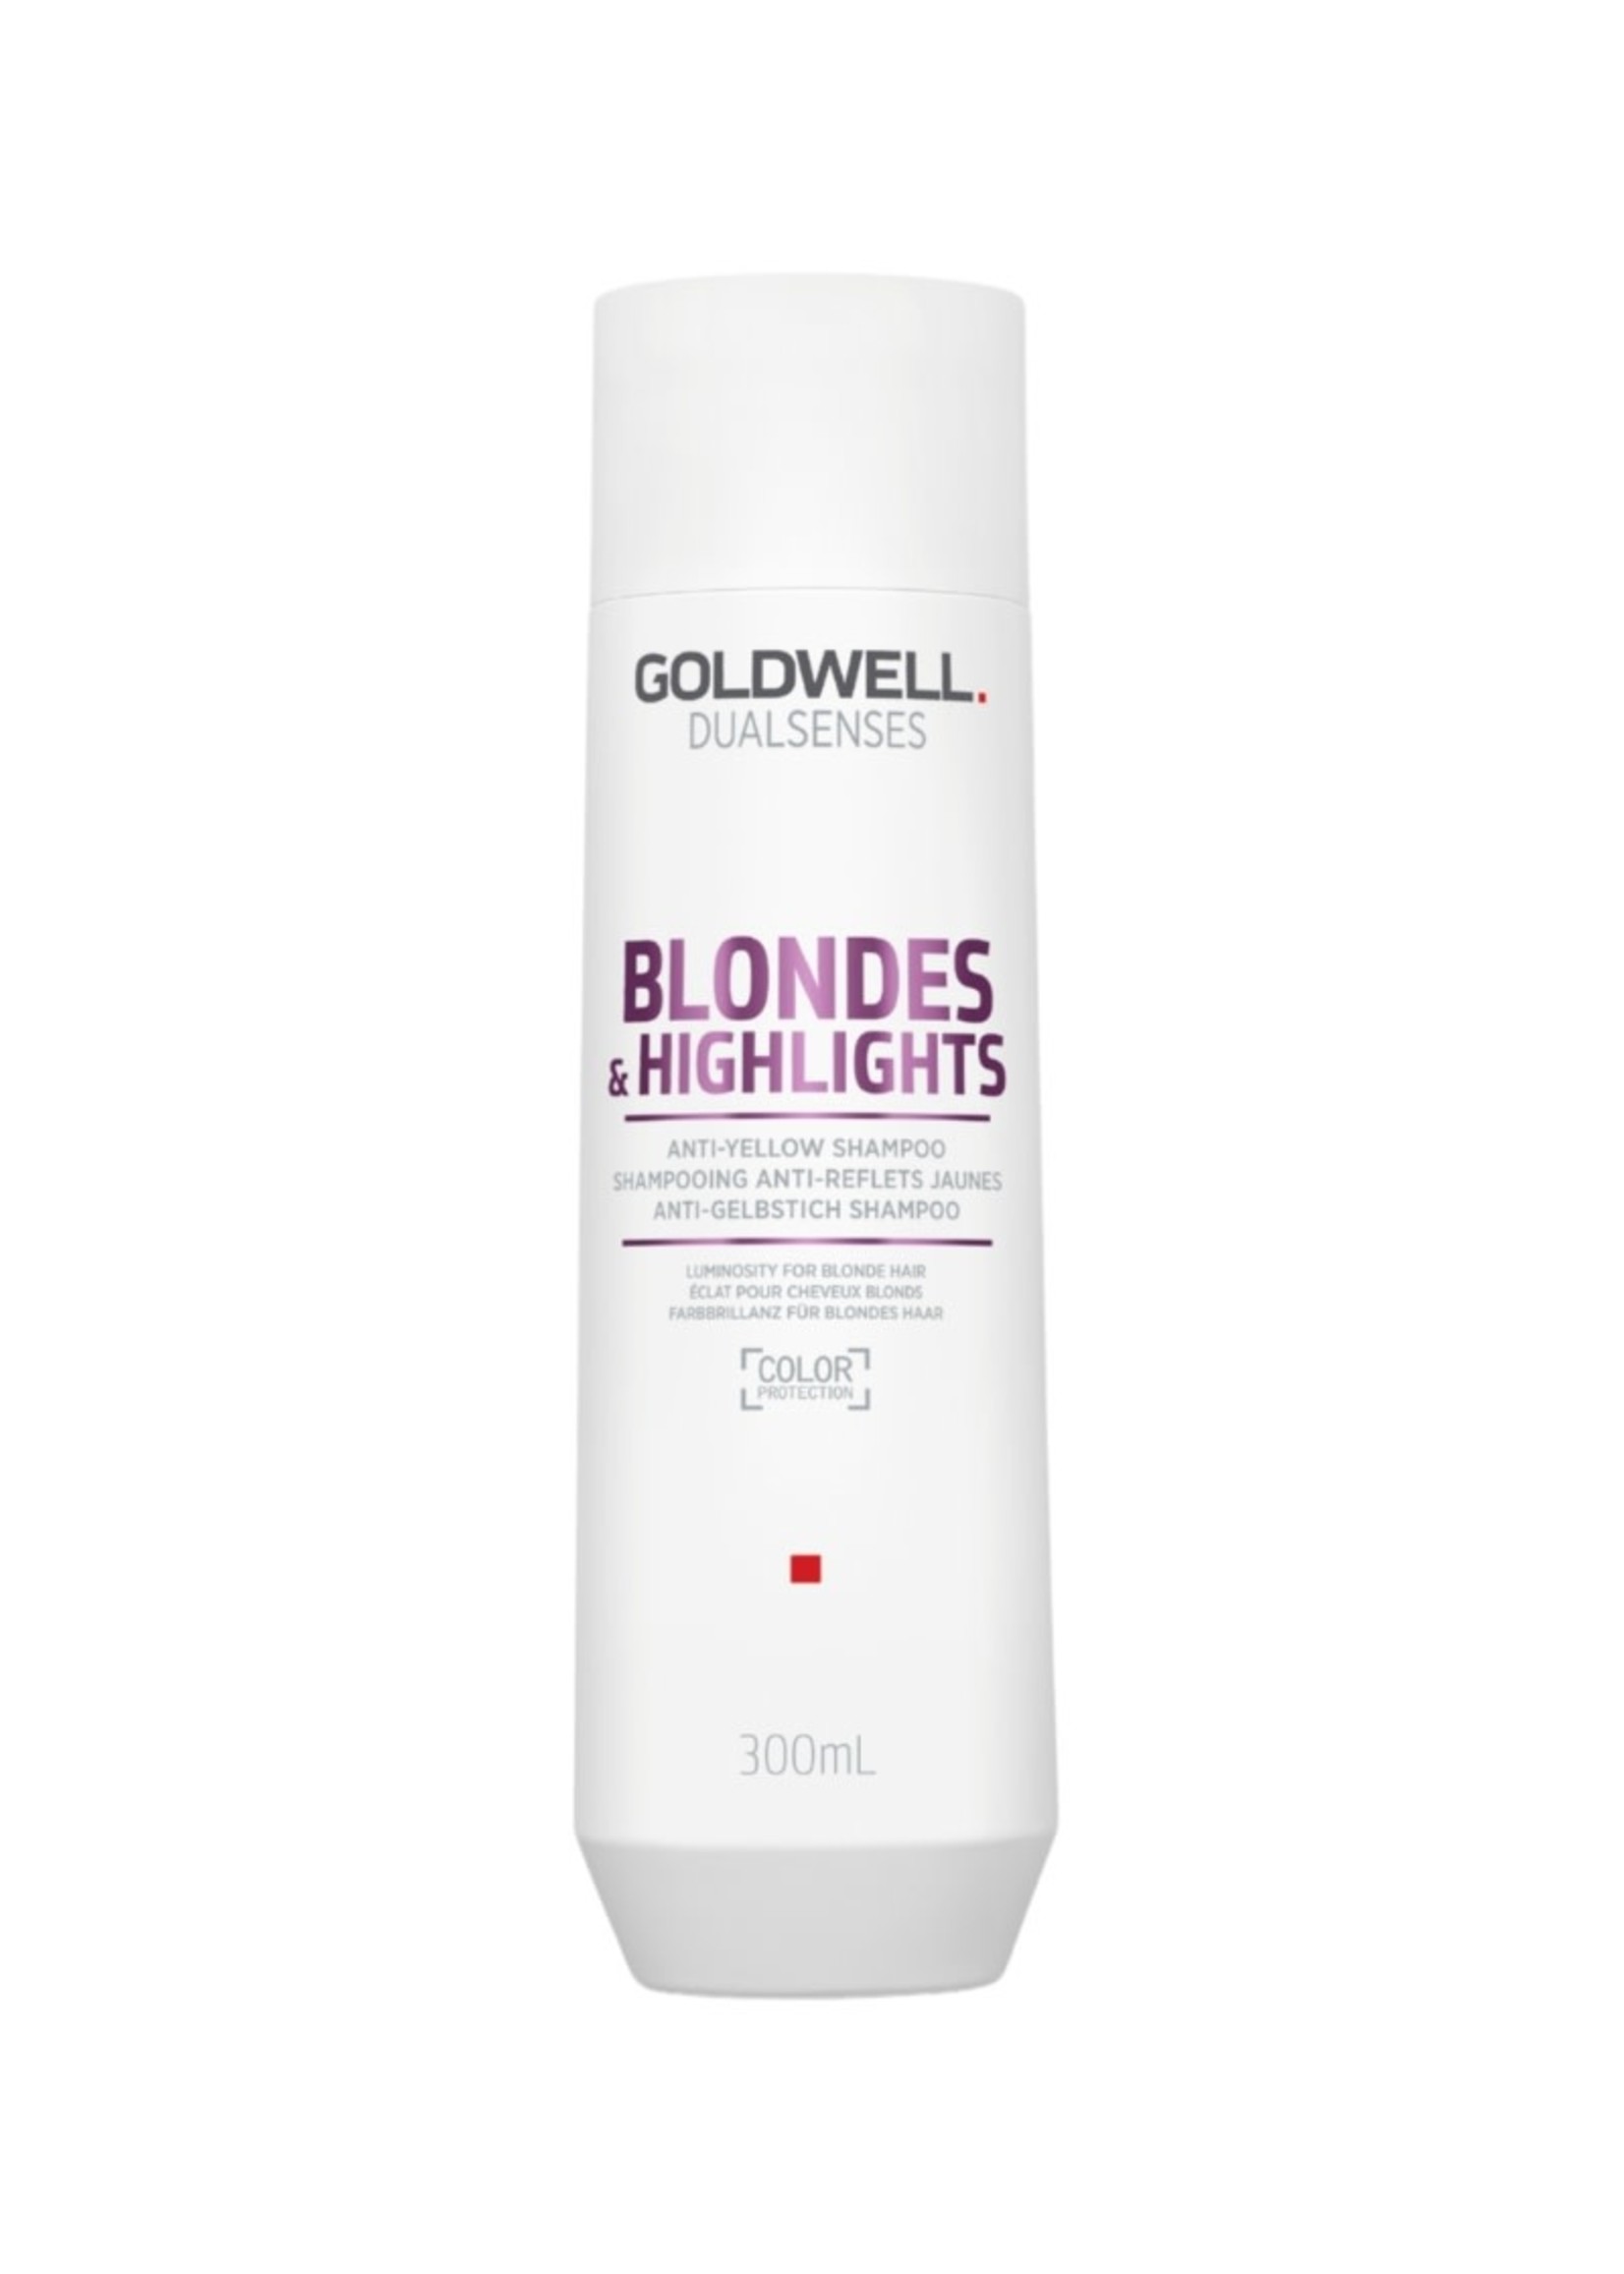 Goldwell Goldwell Dualsenses Blondes & Highlights Anti-Yellow Shampoo 300ml